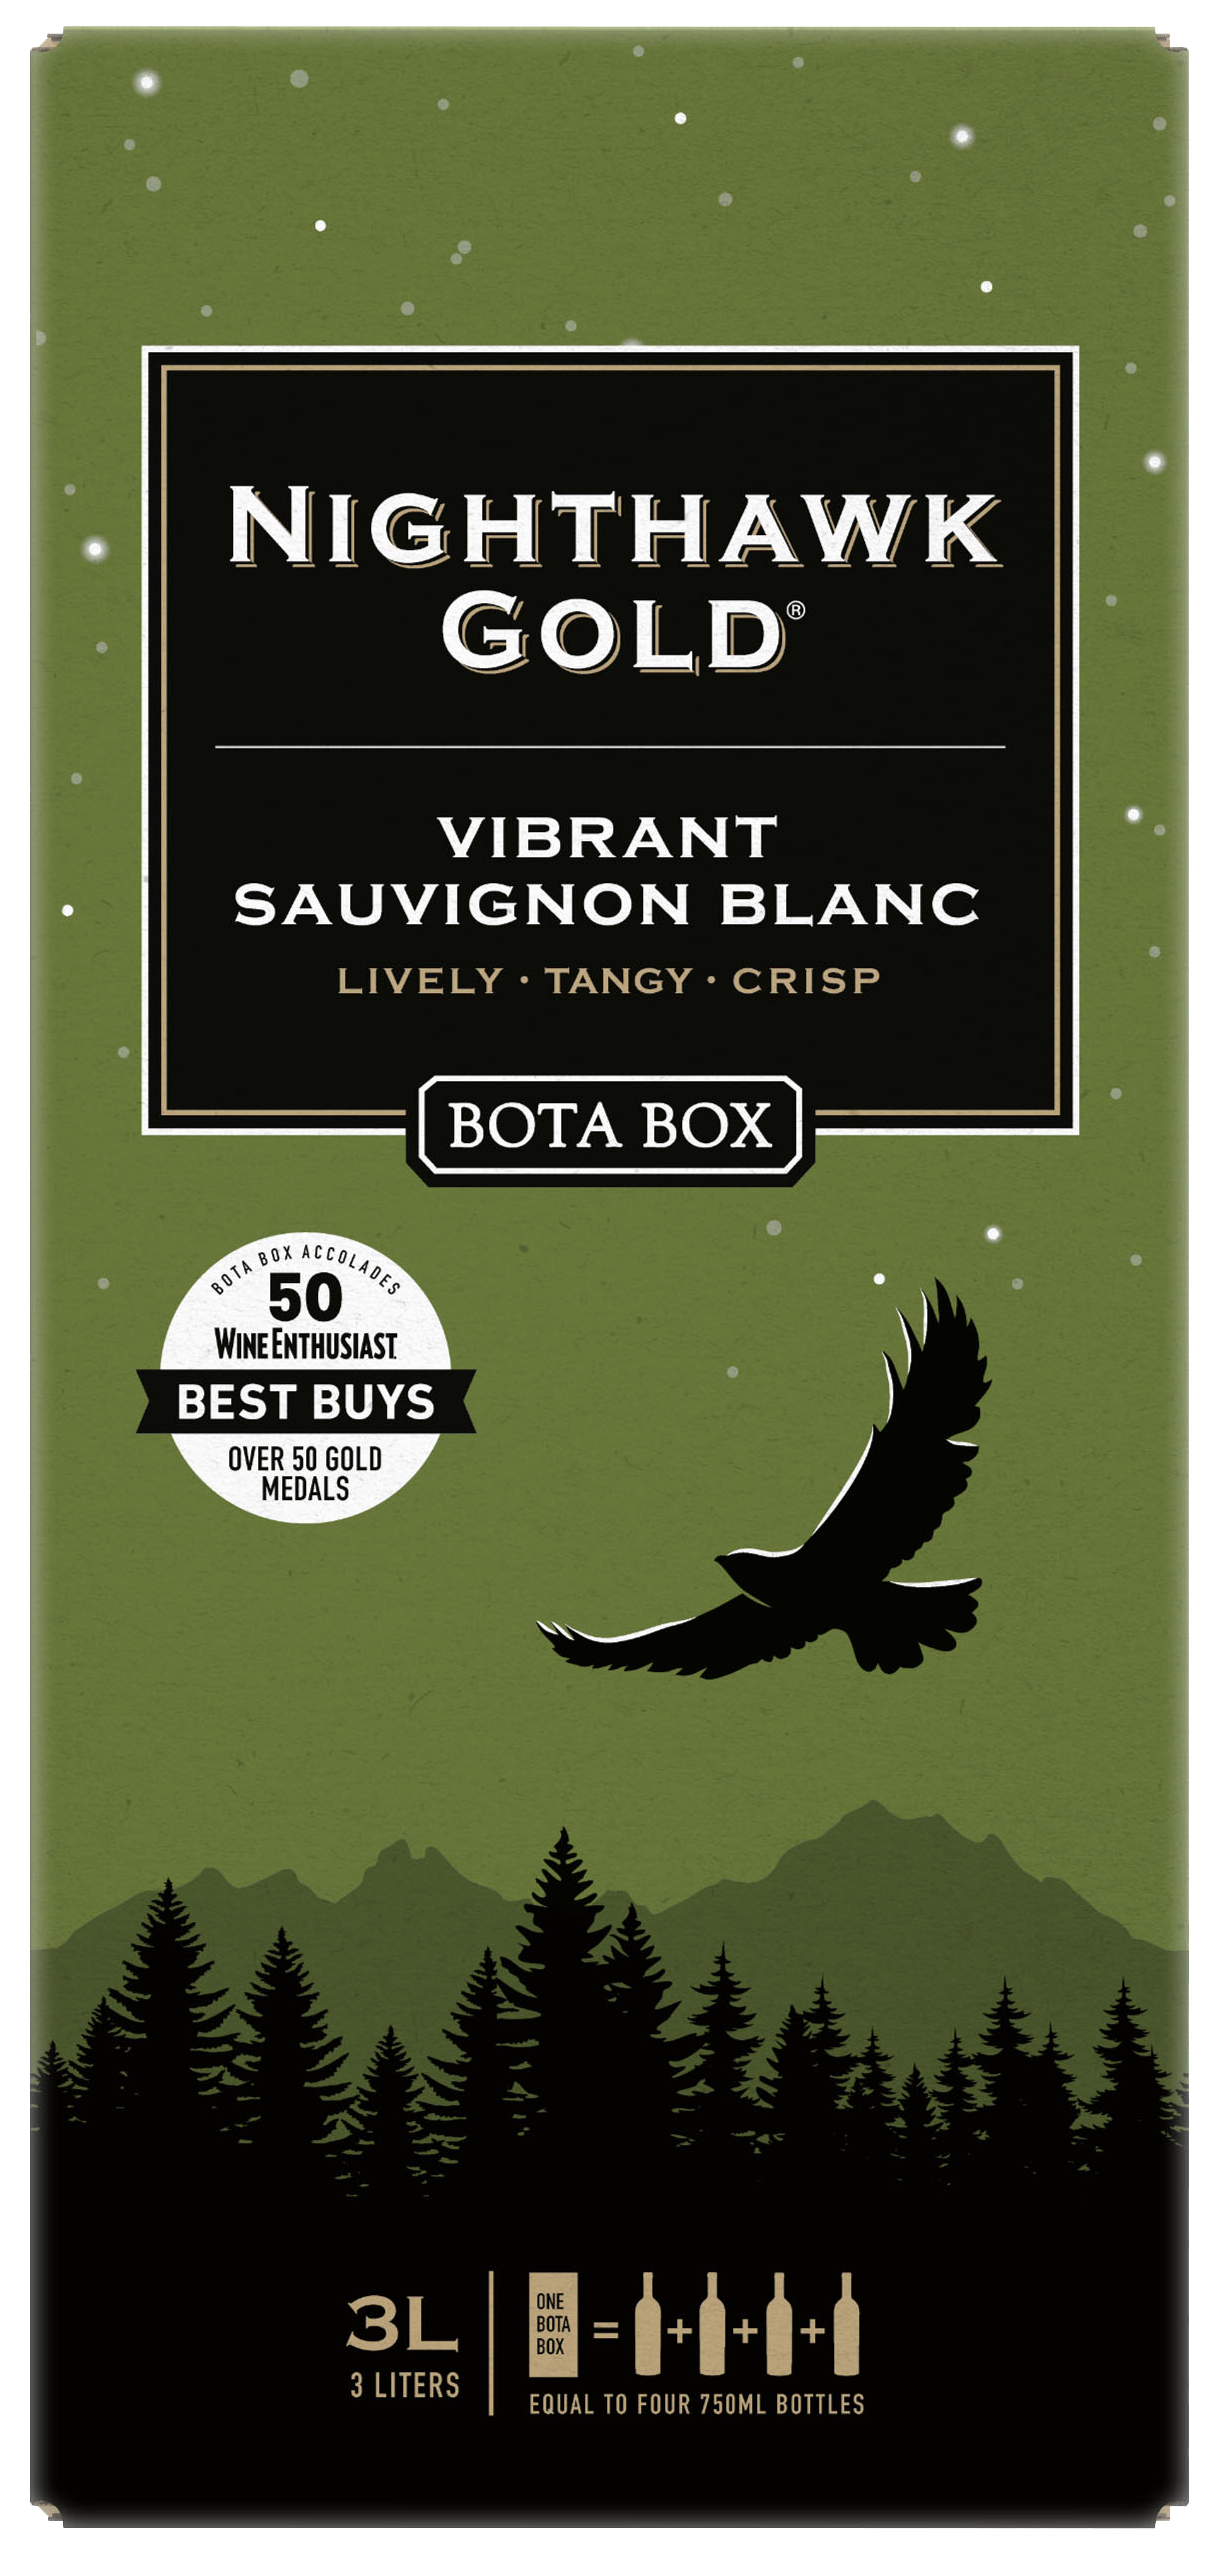 A box of Bota Box Nighthawk Gold Vibrant Sauvignon Blanc